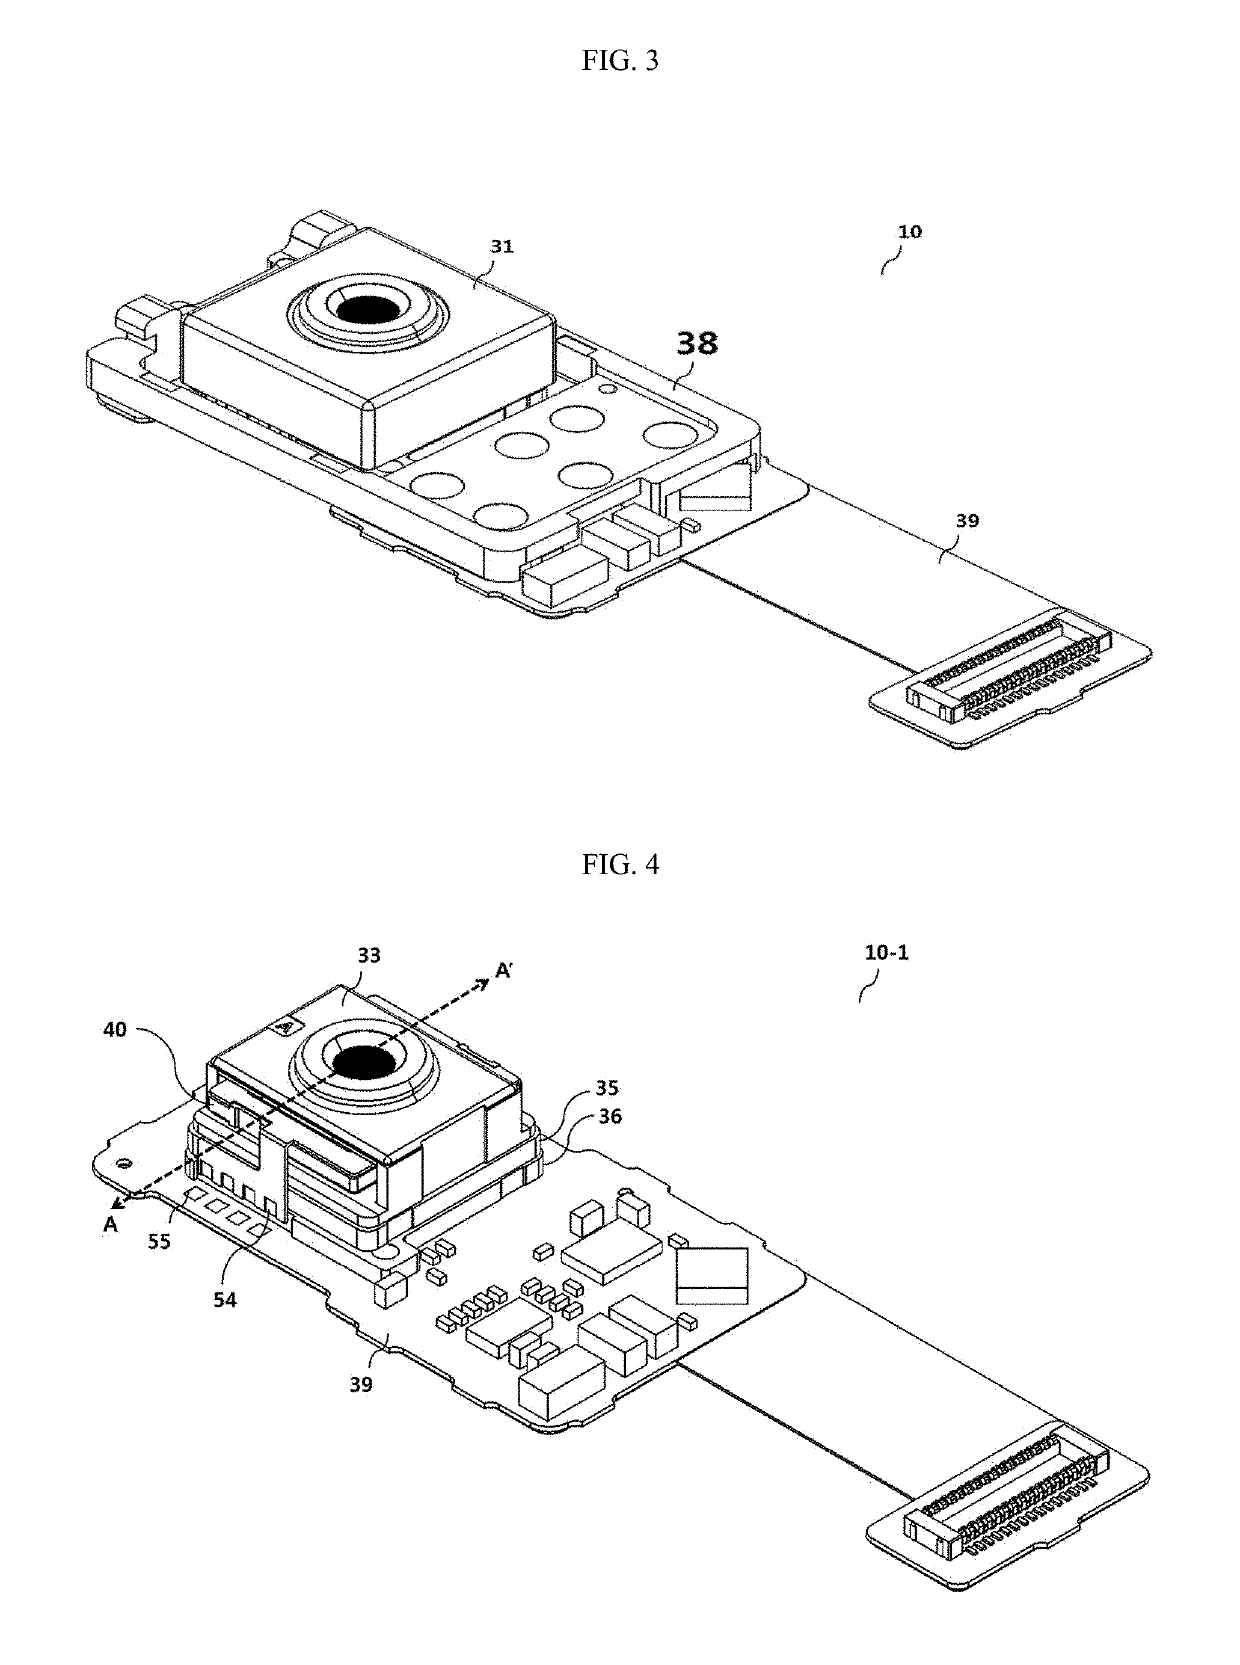 Camera module and optical device including liquid lens